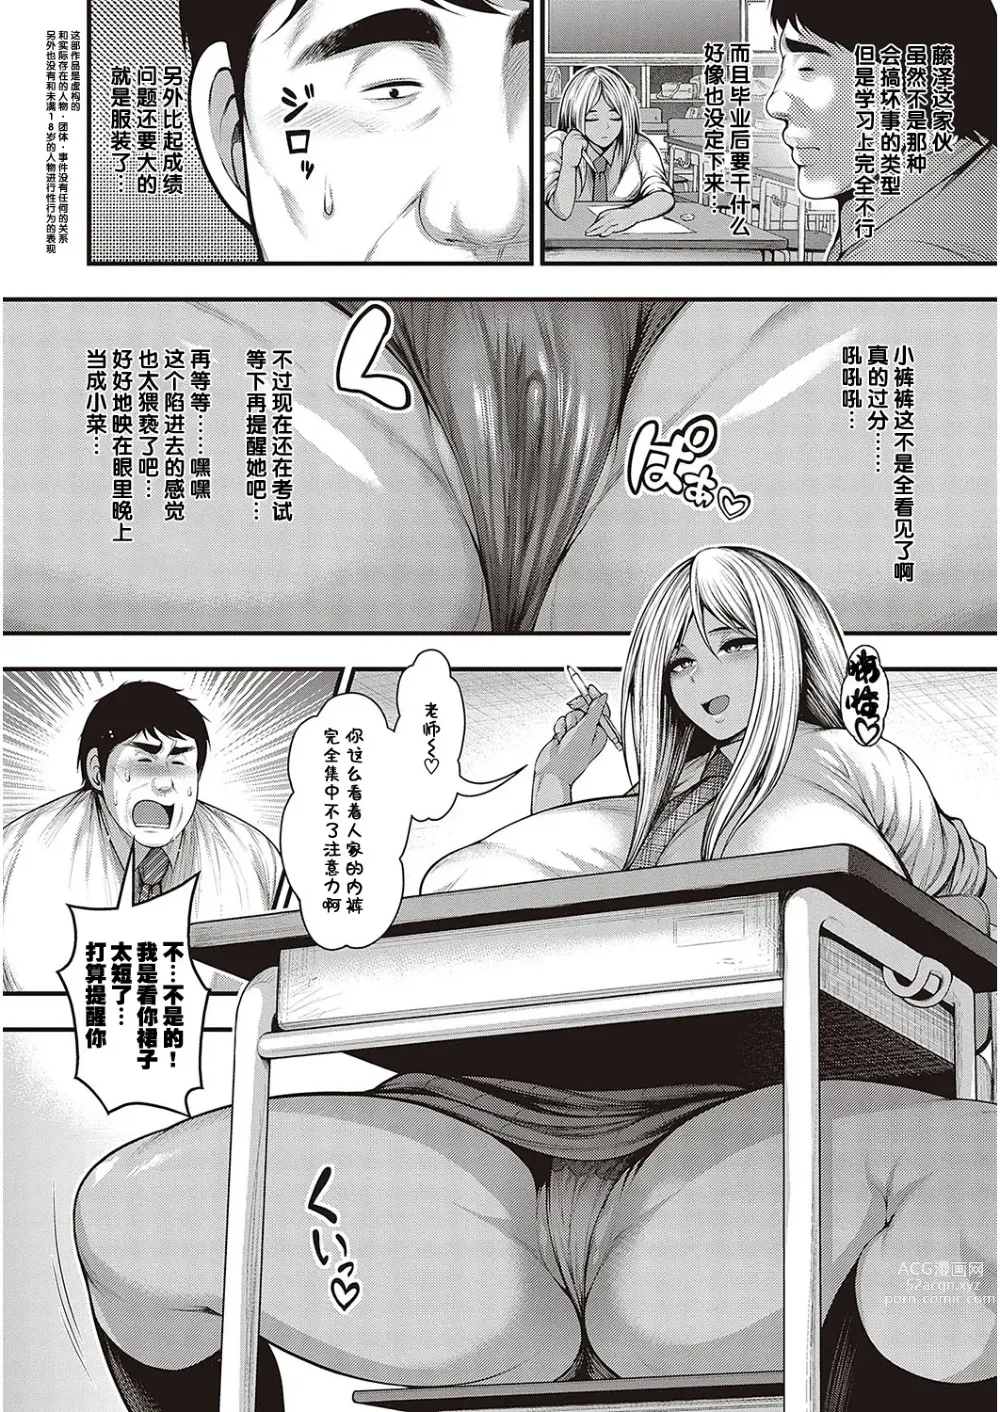 Page 3 of manga 肉感十足的黑皮辣妹诱惑